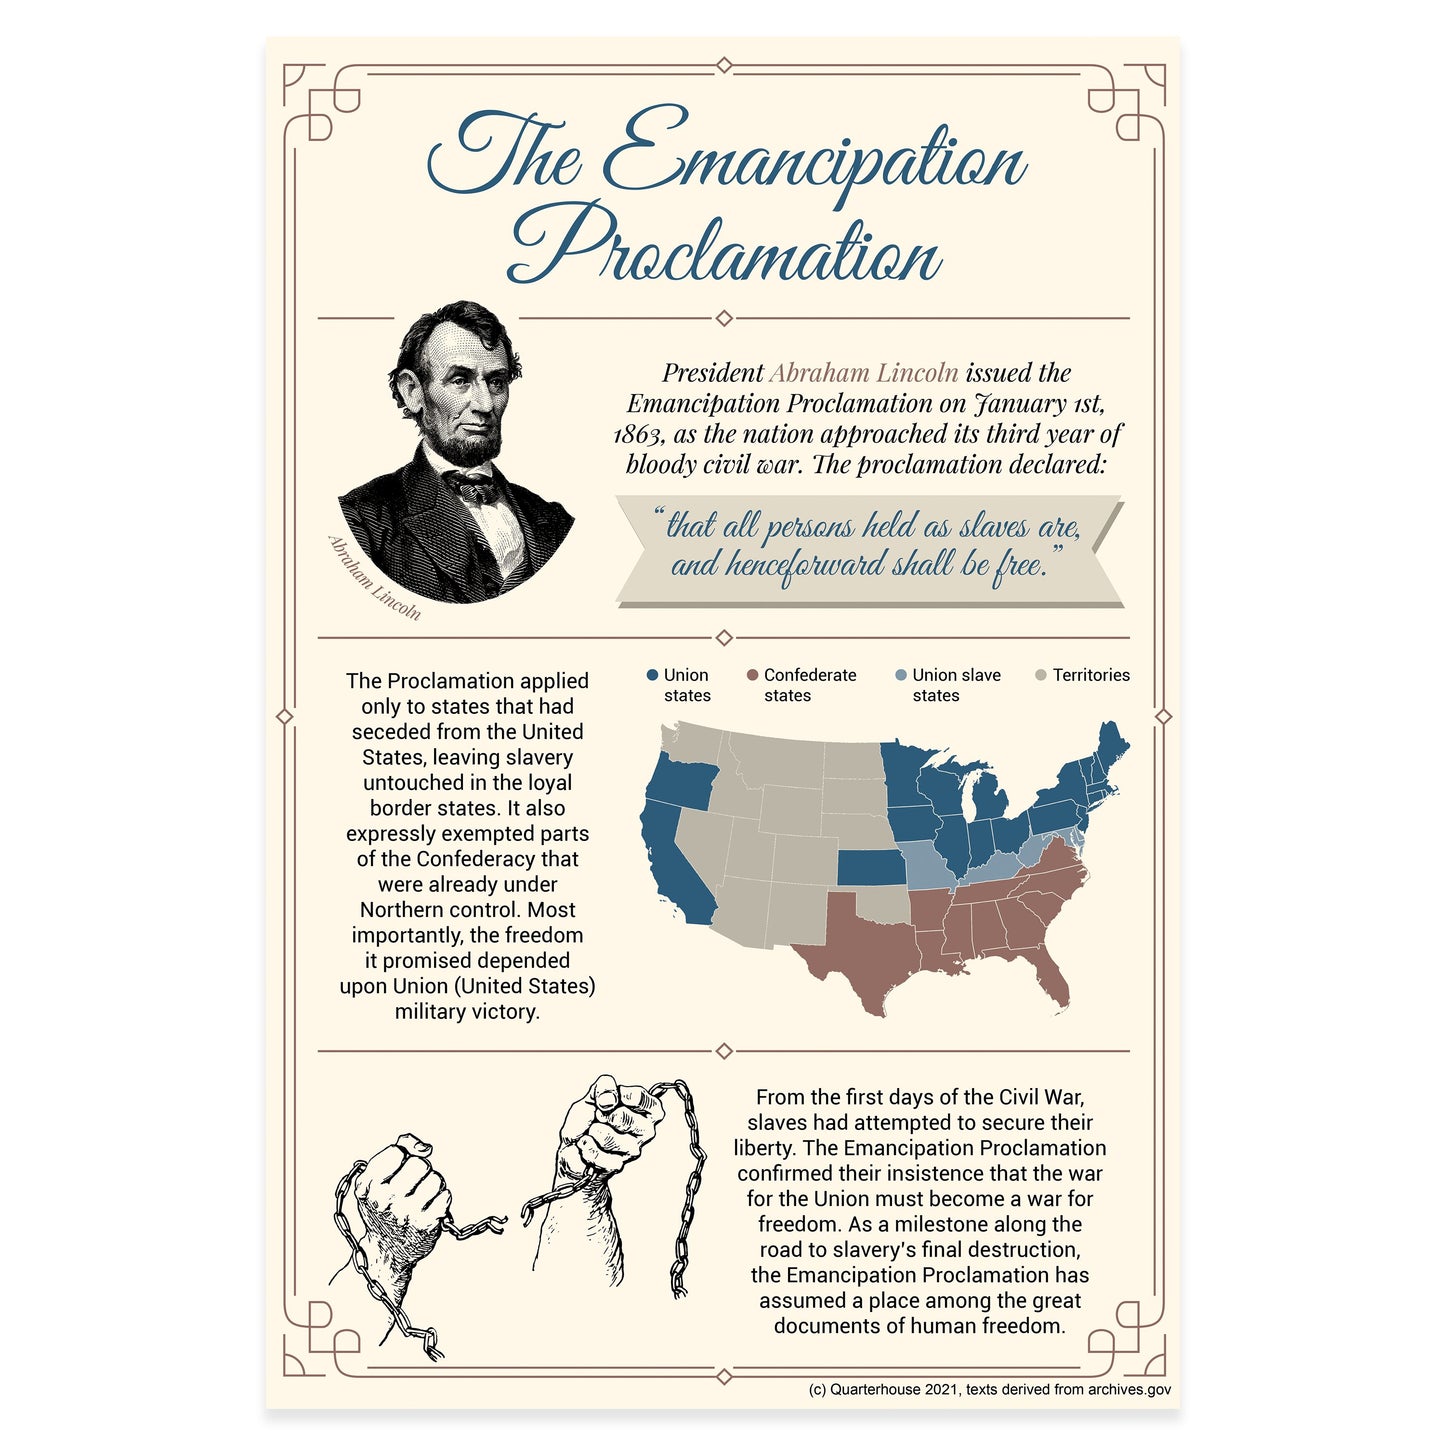 Quarterhouse Emancipation Proclamation Poster, Social Studies Classroom Materials for Teachers